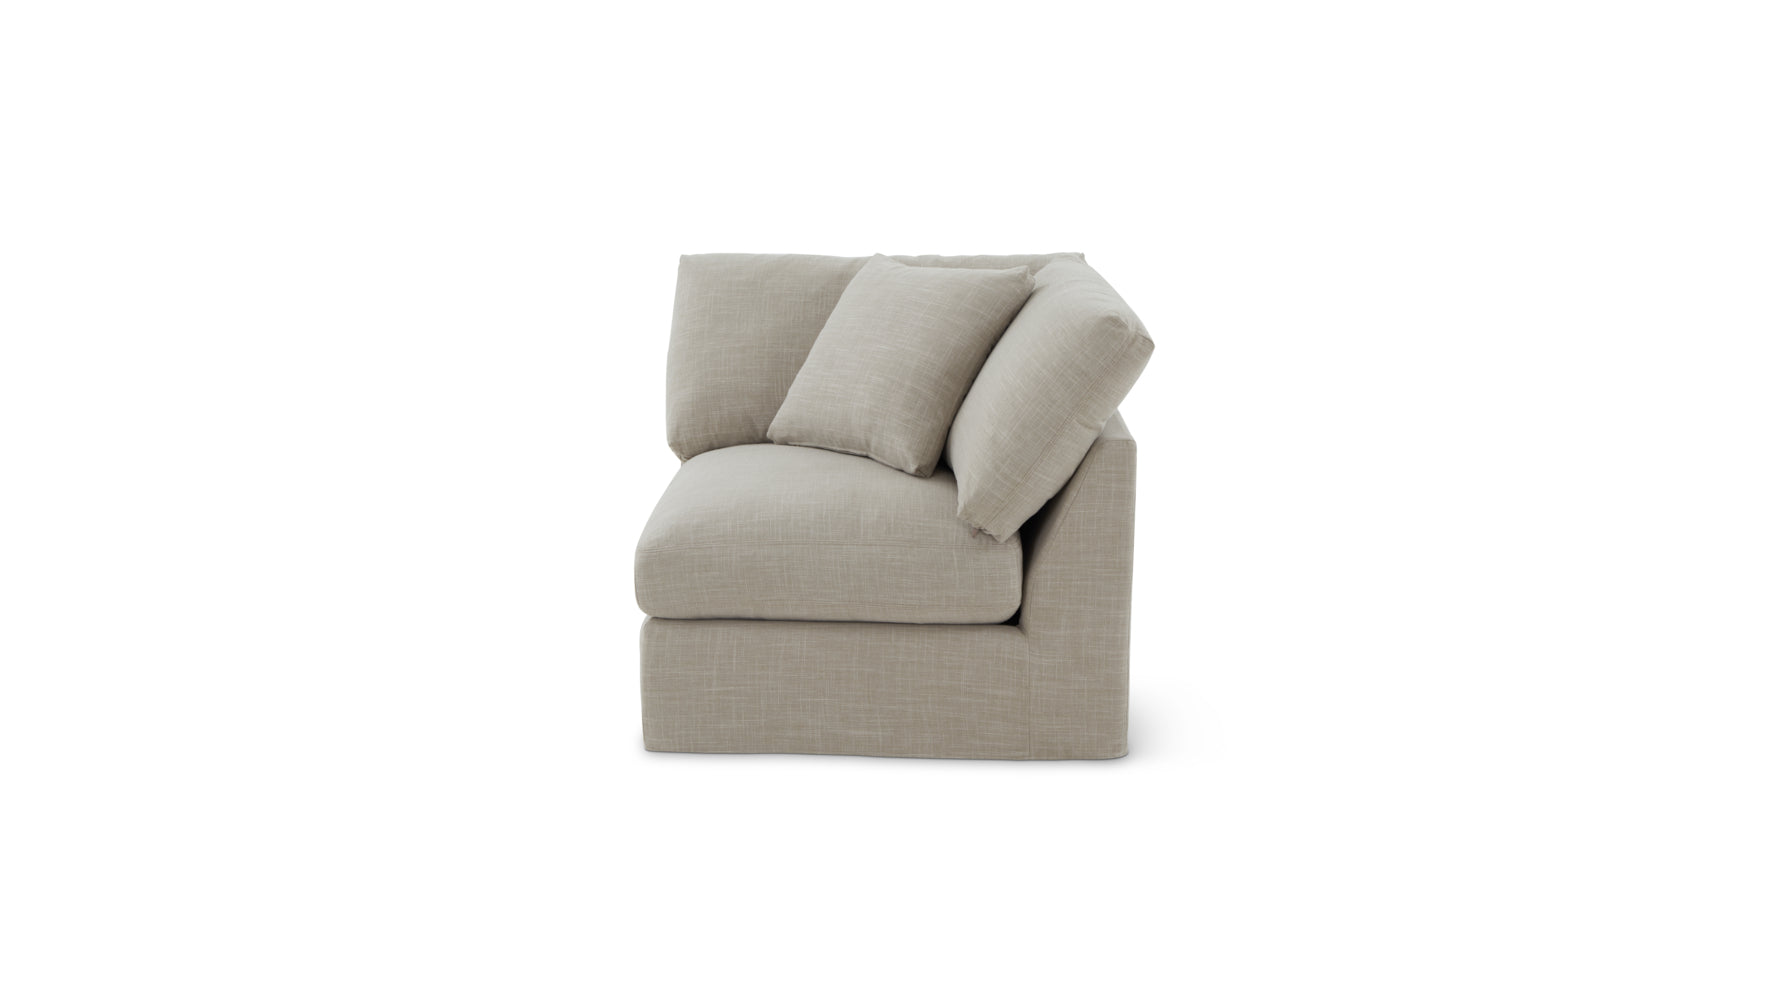 Slipcover - Get Together™ Corner Chair, Standard, Light Pebble (Left Or Right) - Image 2